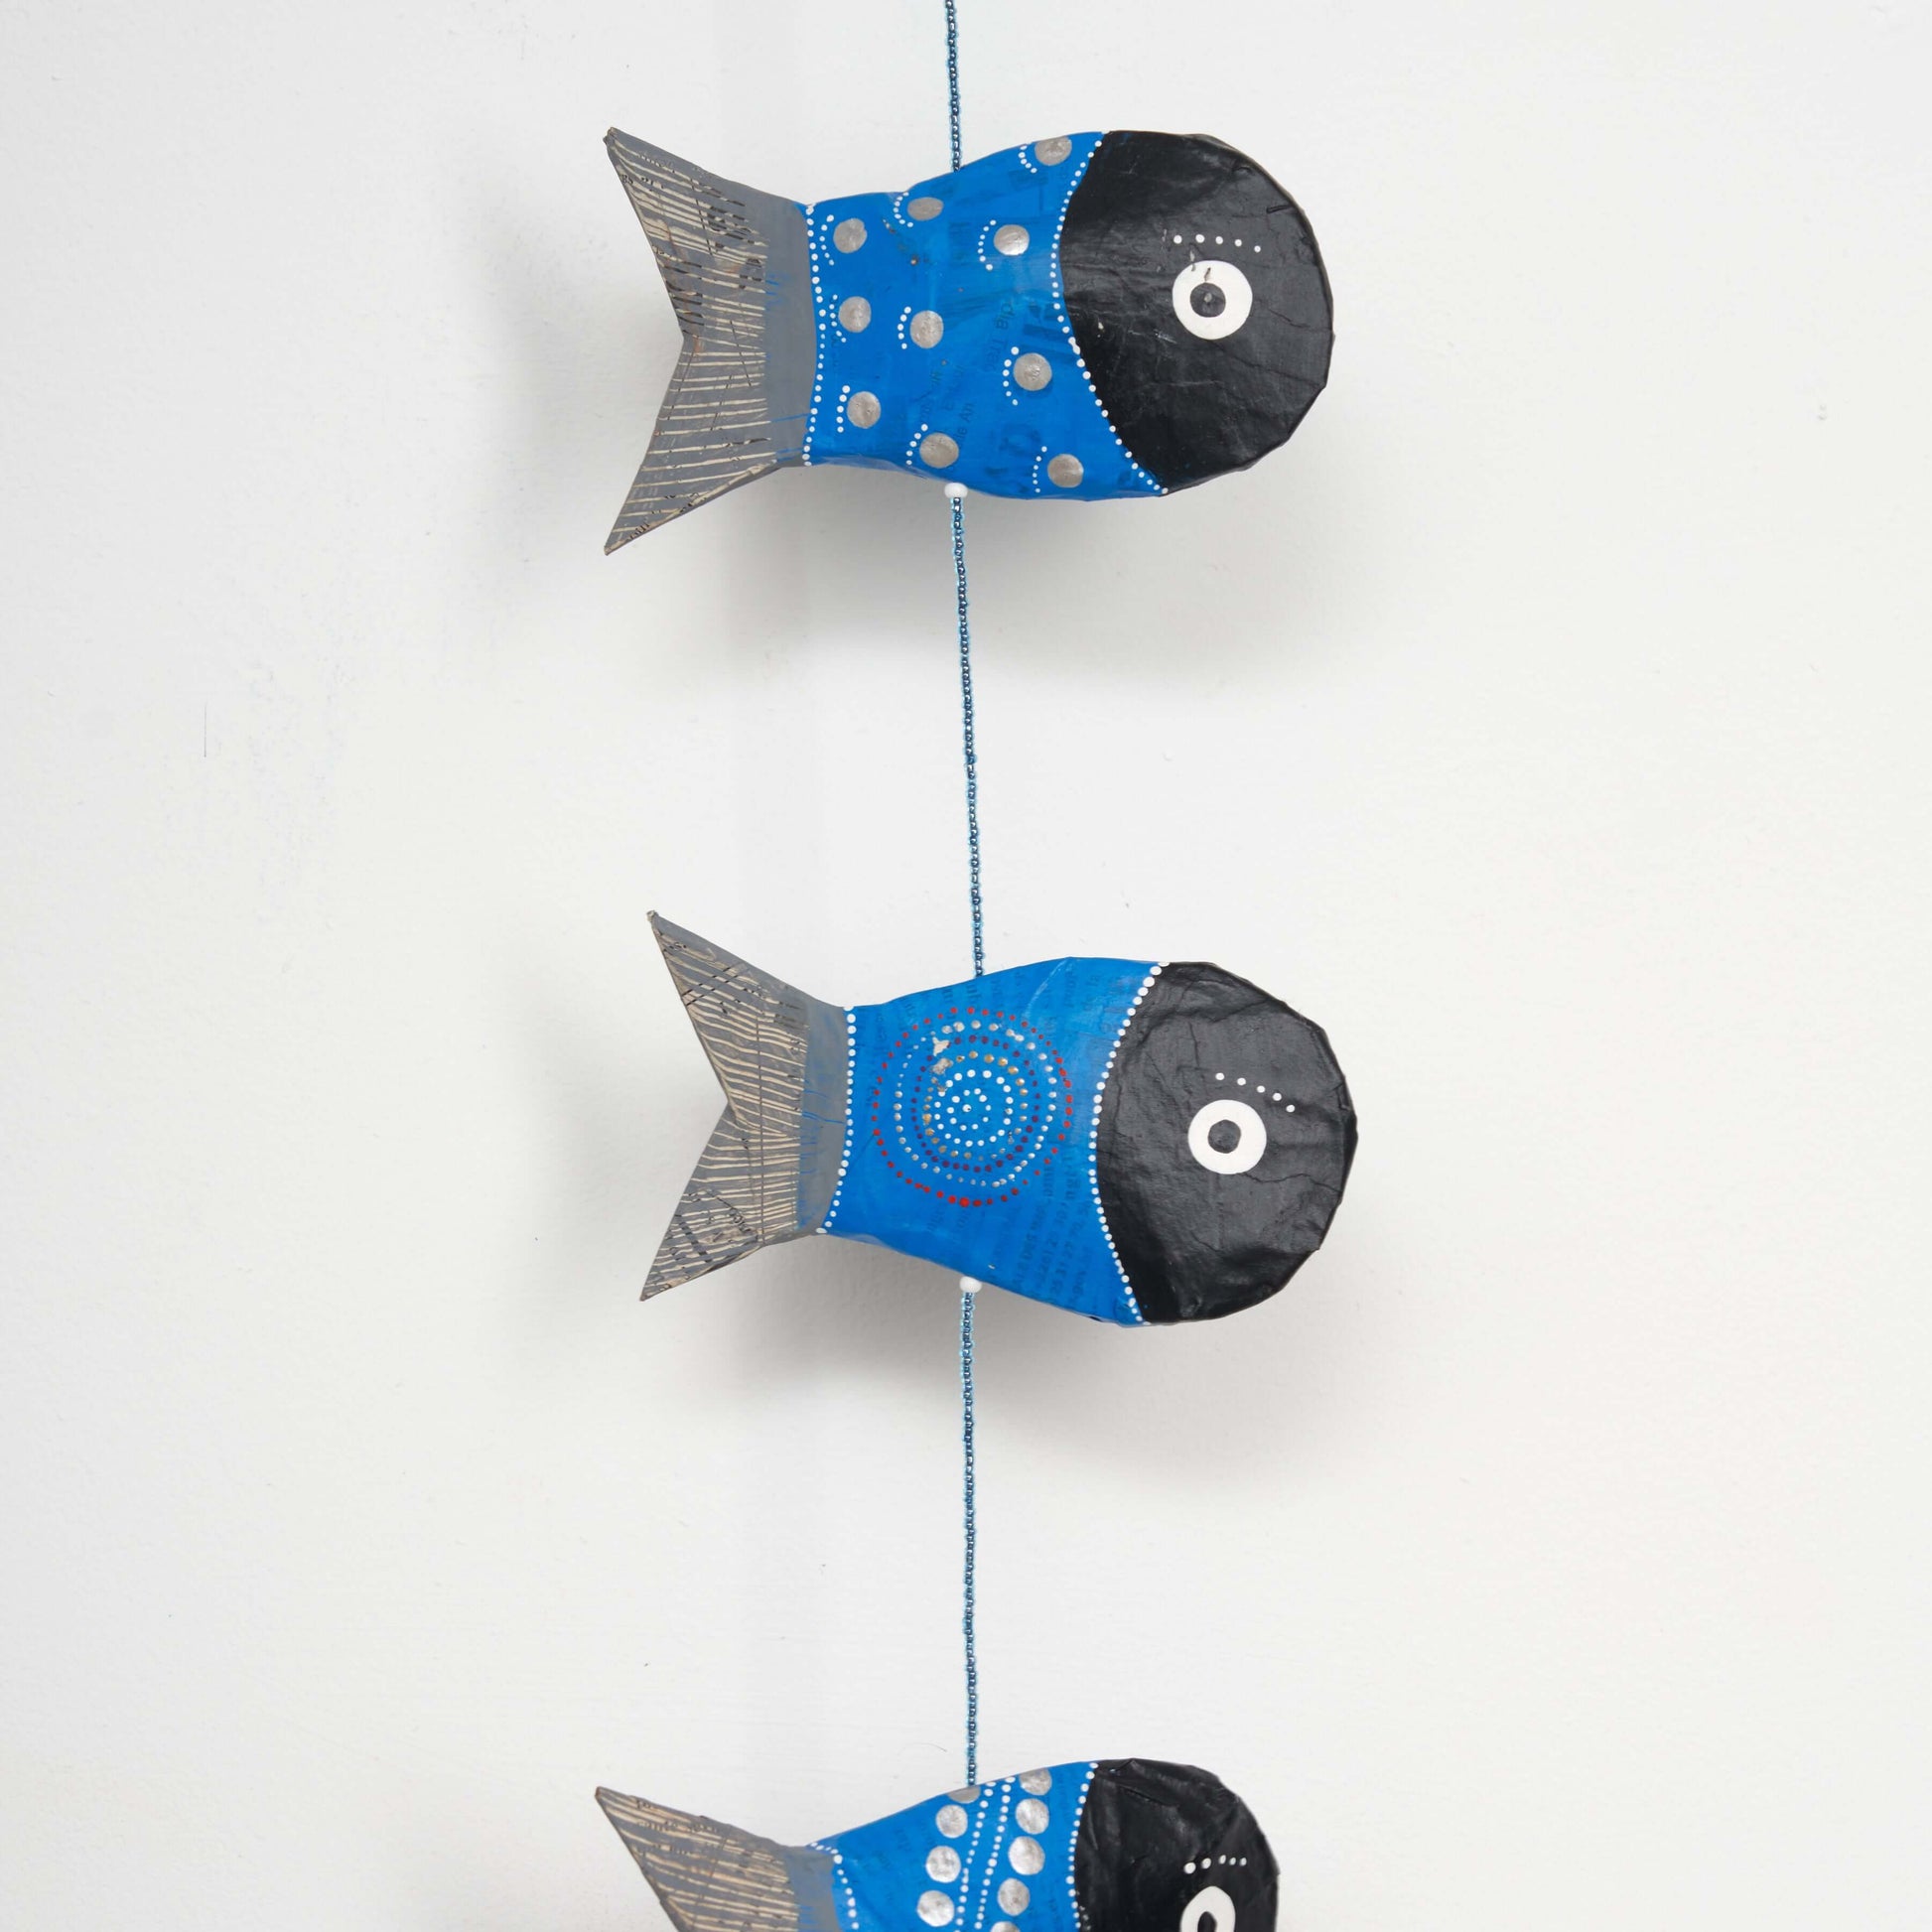 Girlande / Mobilé "Big Fish" aus Pappmaché aus recyceltem Papier | Upcycling, handgemacht